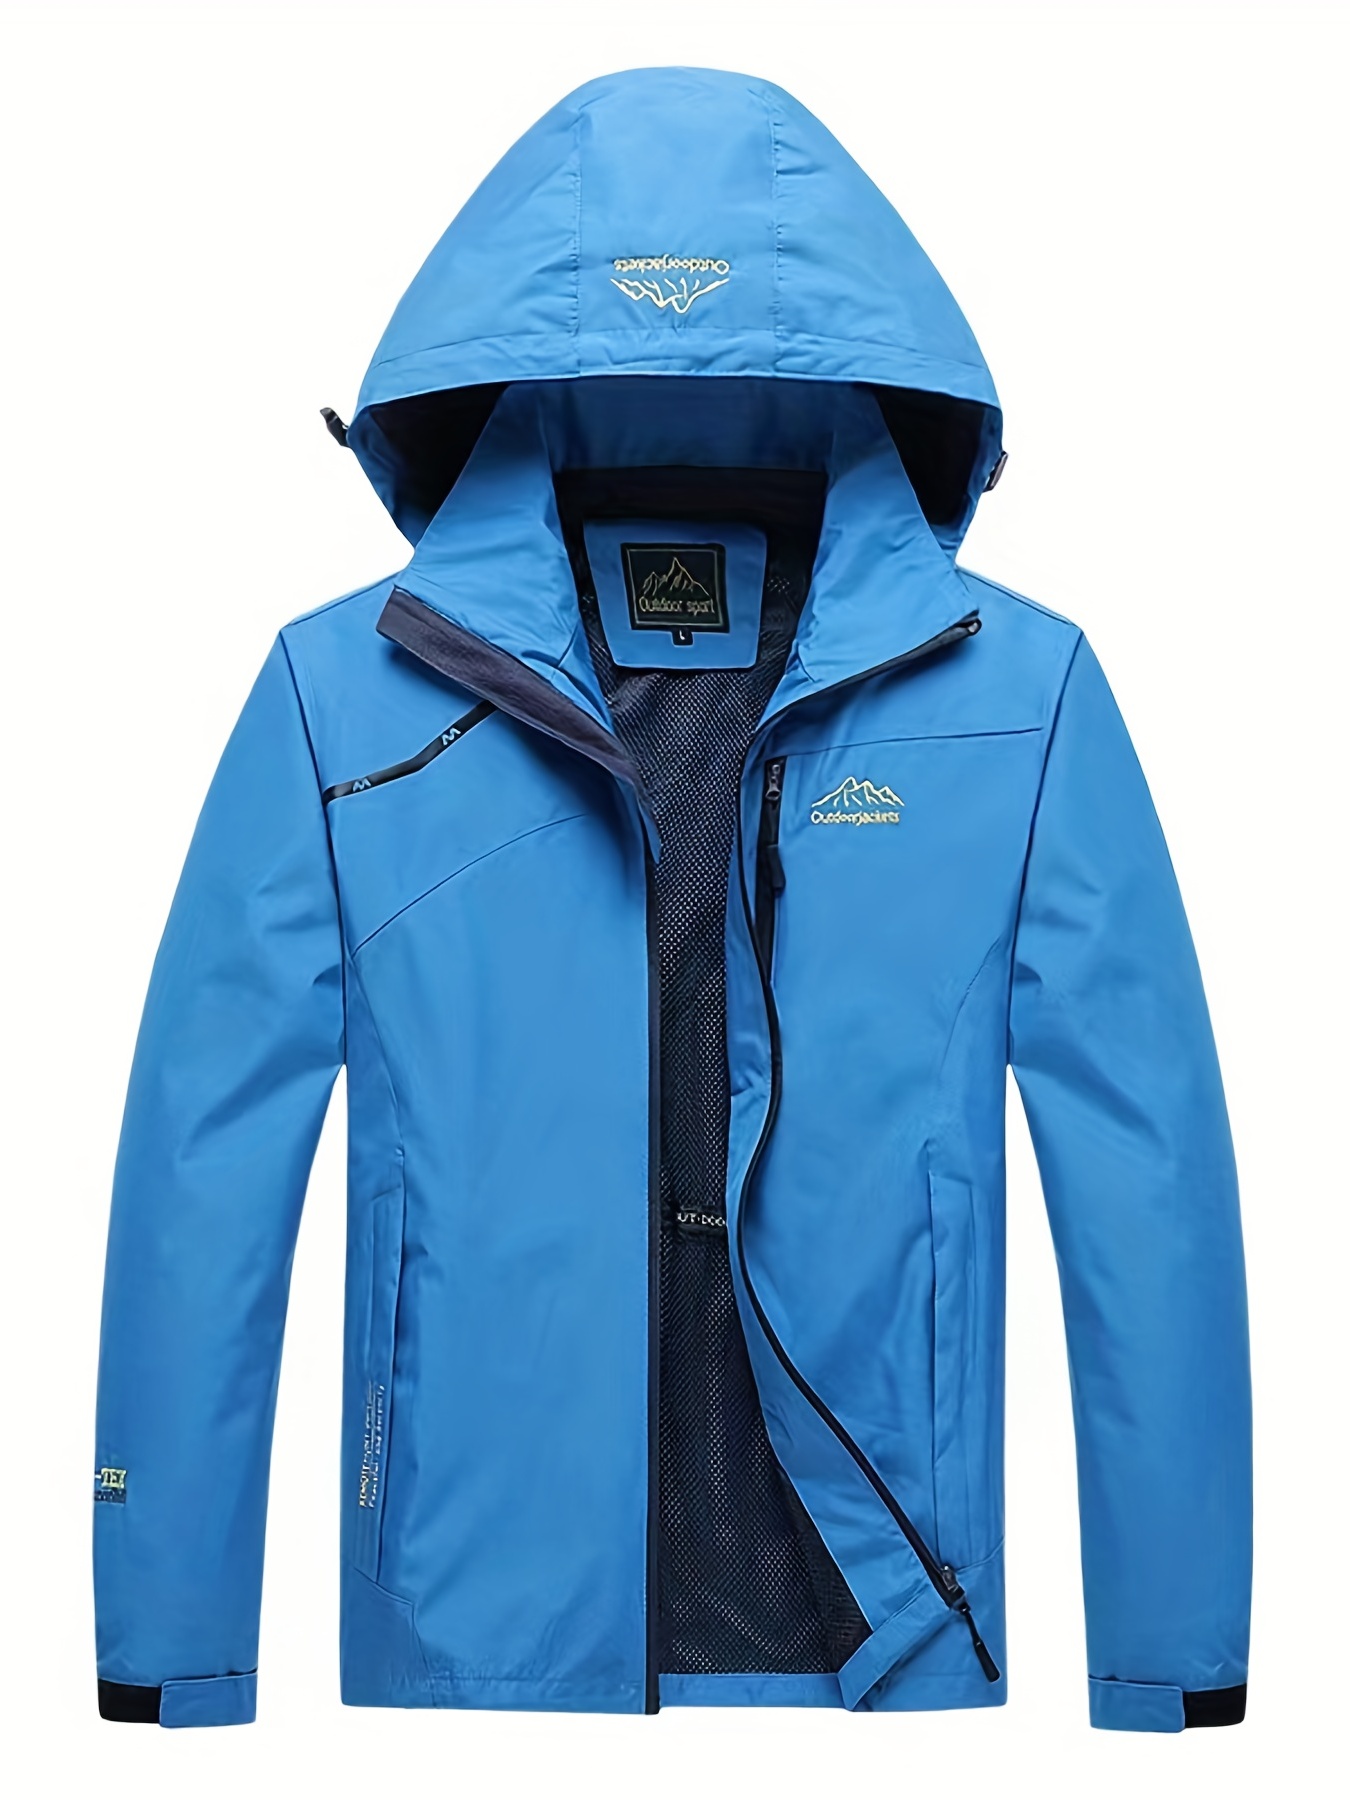 mens waterproof rain jacket lightweight raincoat windbreaker with hood for hiking travel outdoor details 15